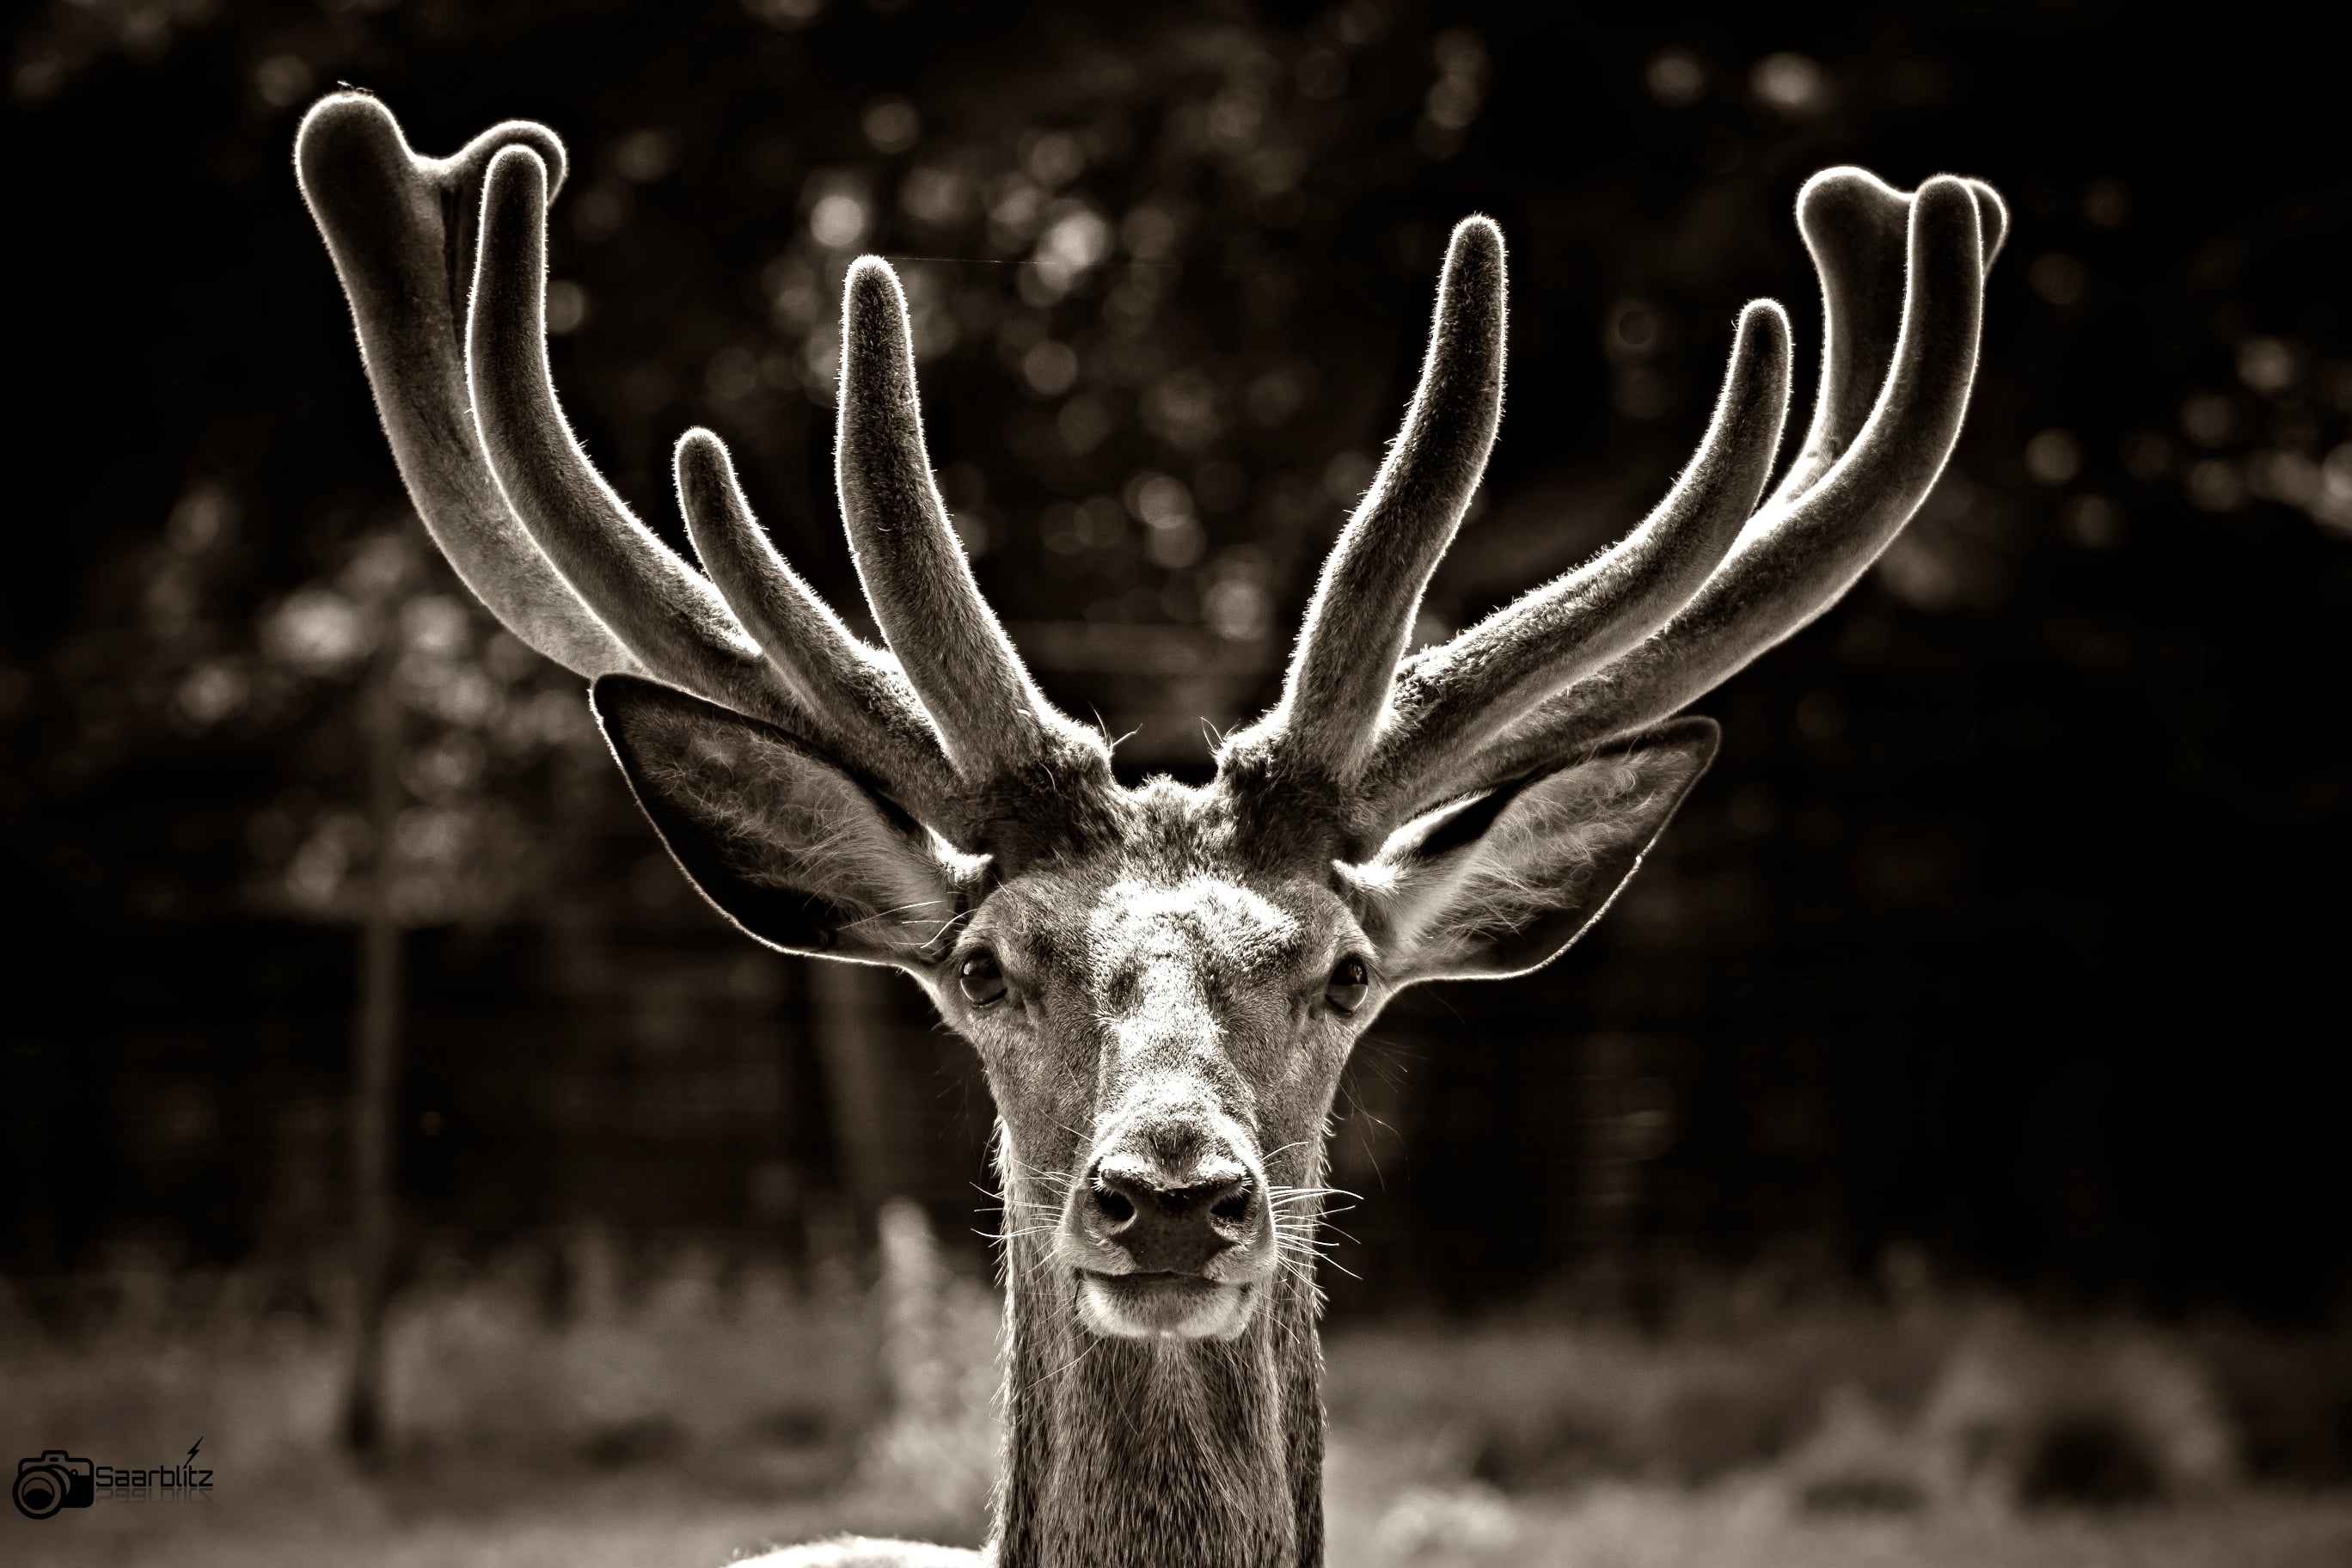 grayscale photo of deer buck